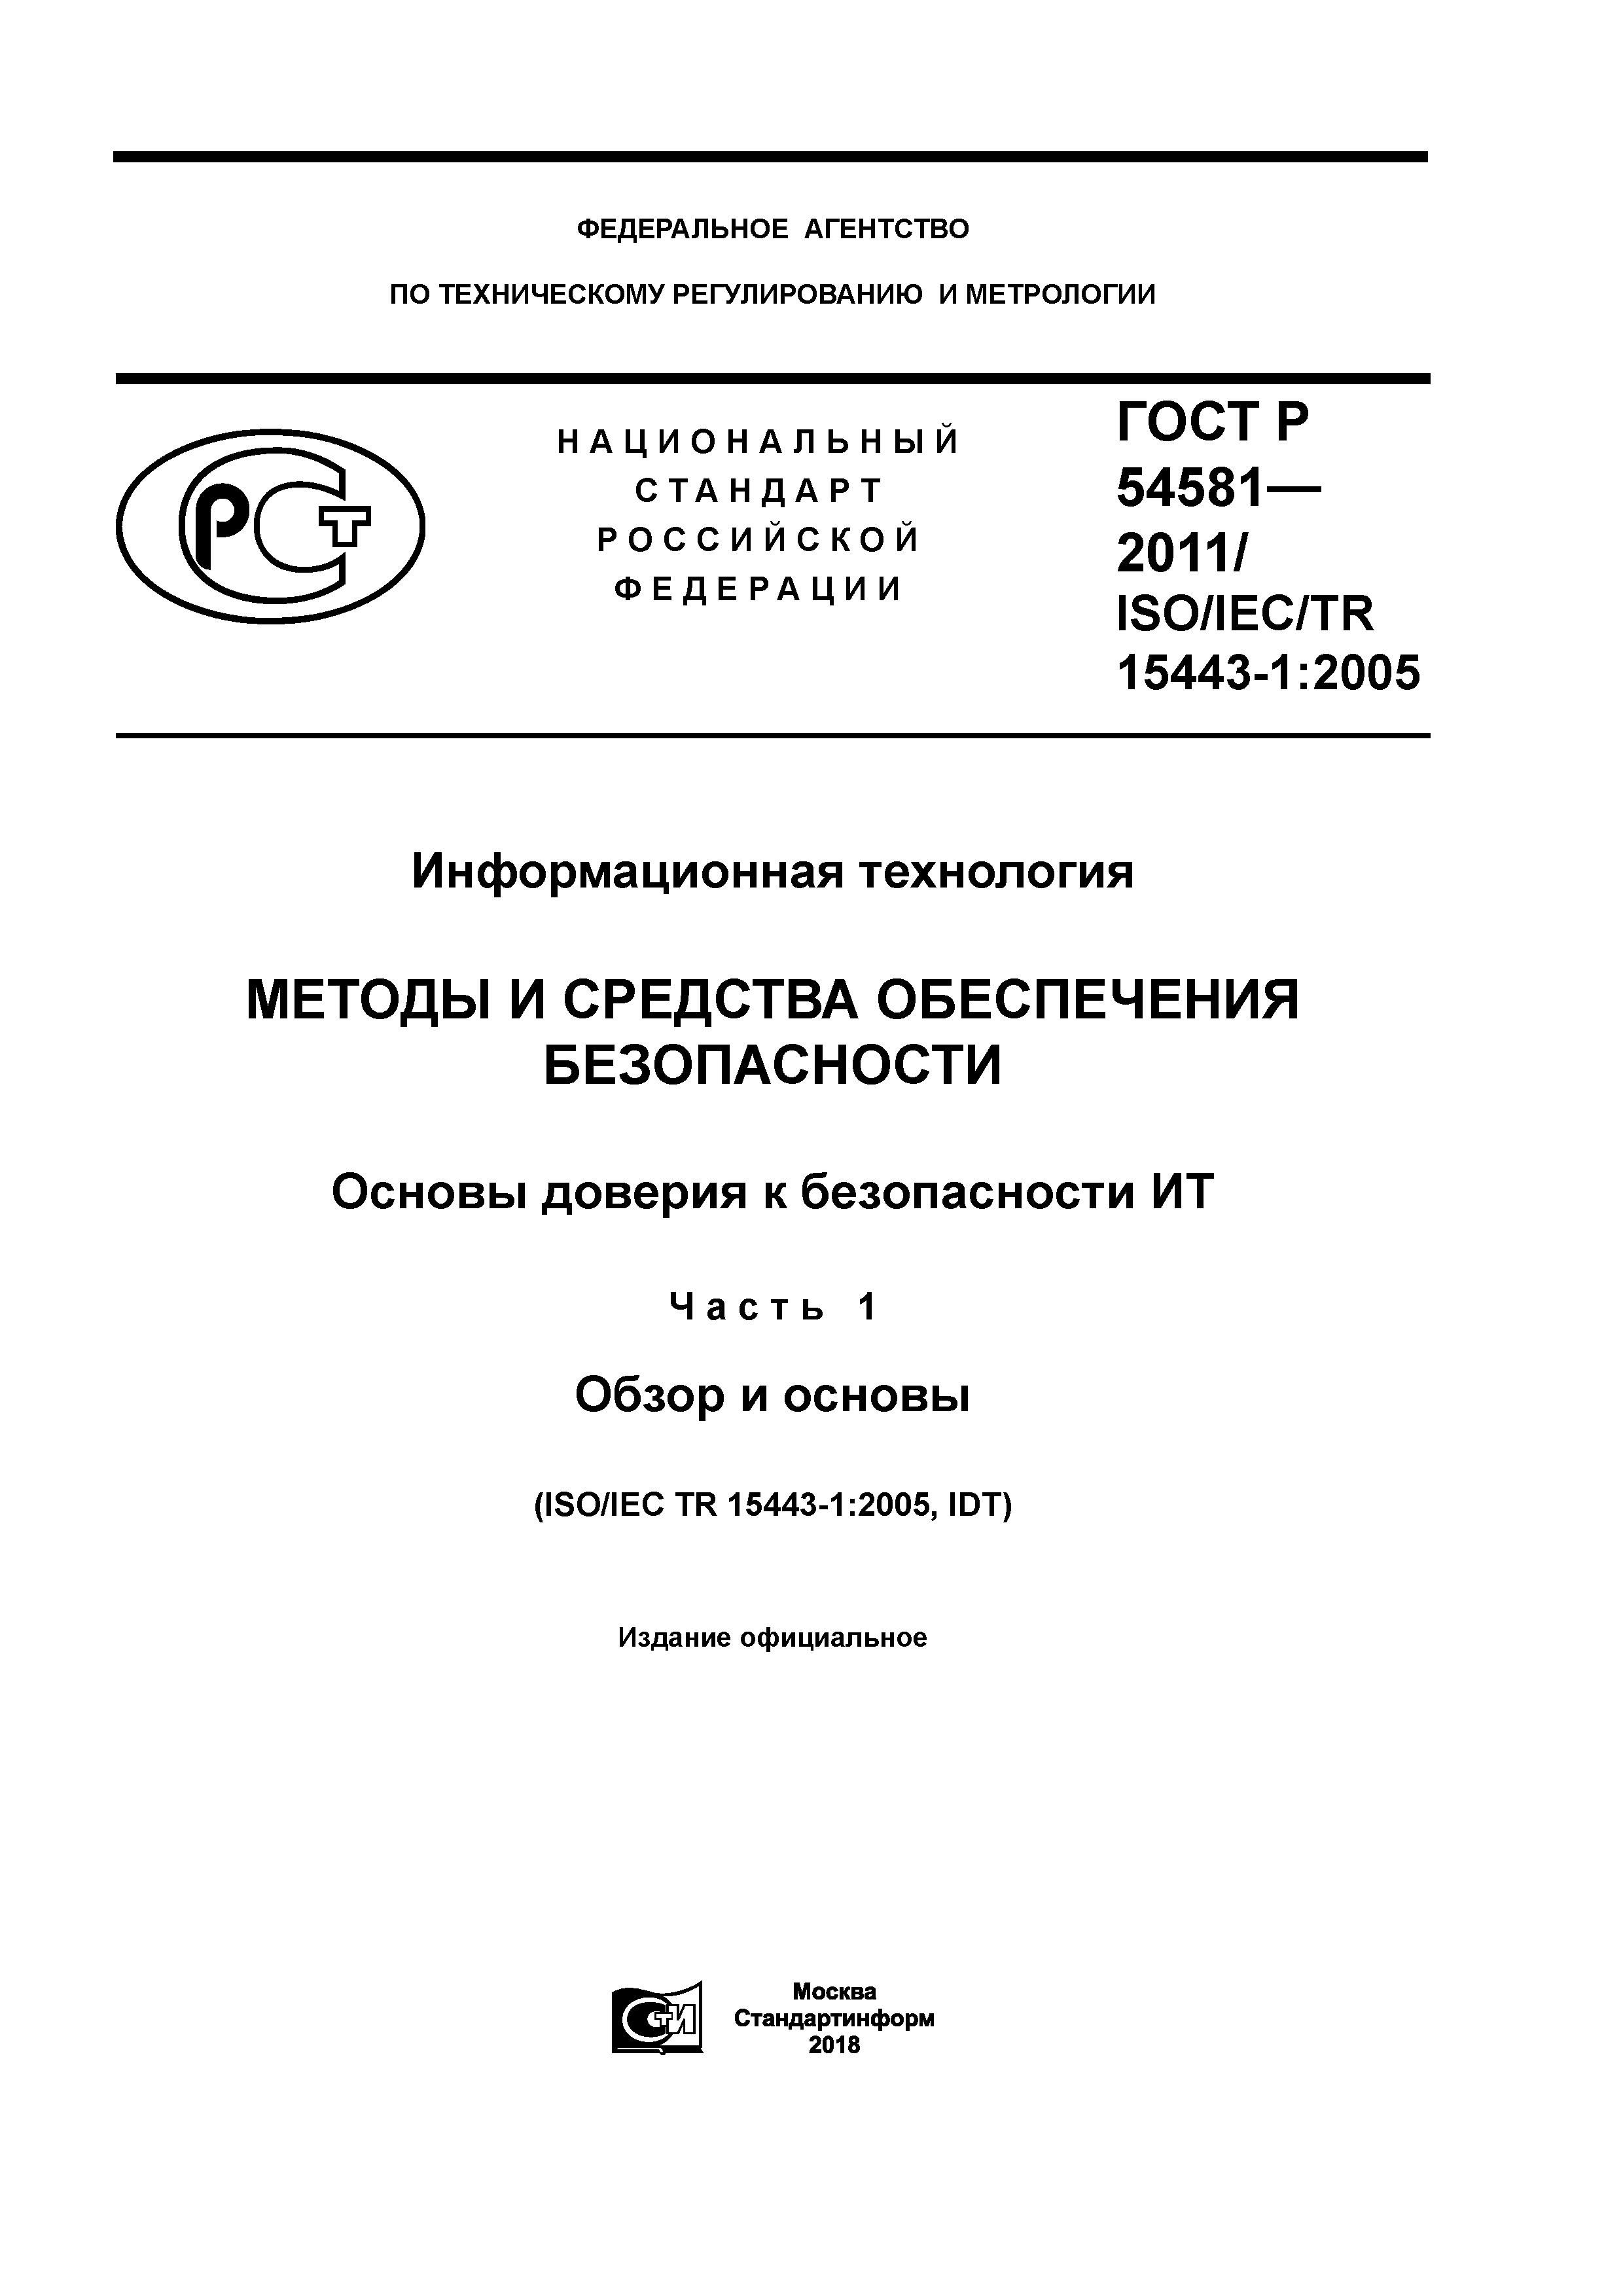 ГОСТ Р 54581-2011